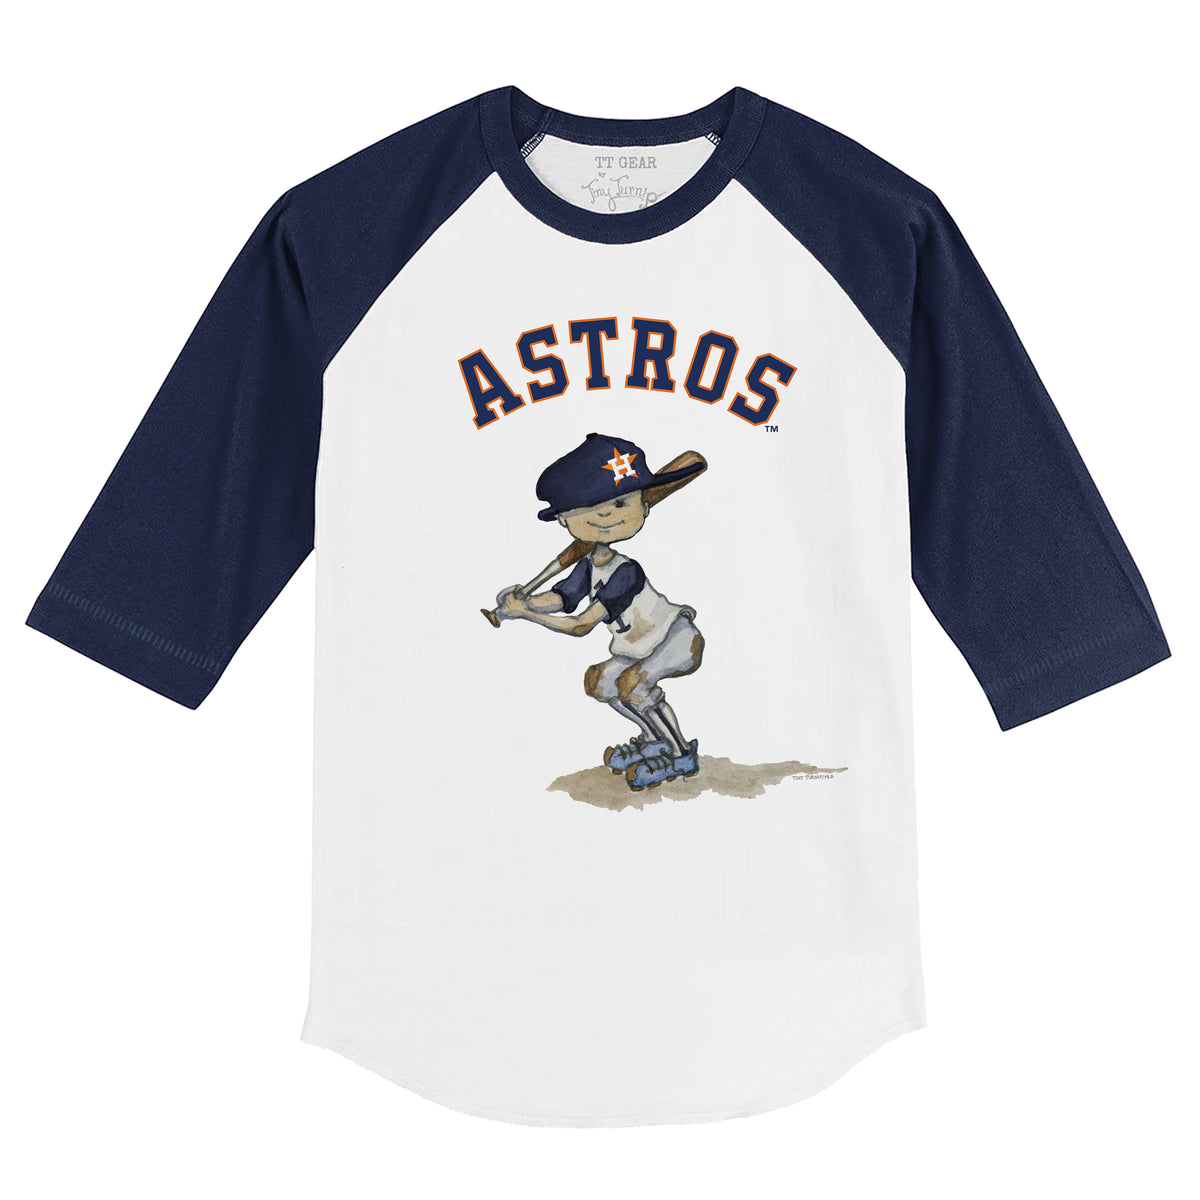 Mlb Houston Astros Toddler Boys' Pullover Jersey - 2t : Target